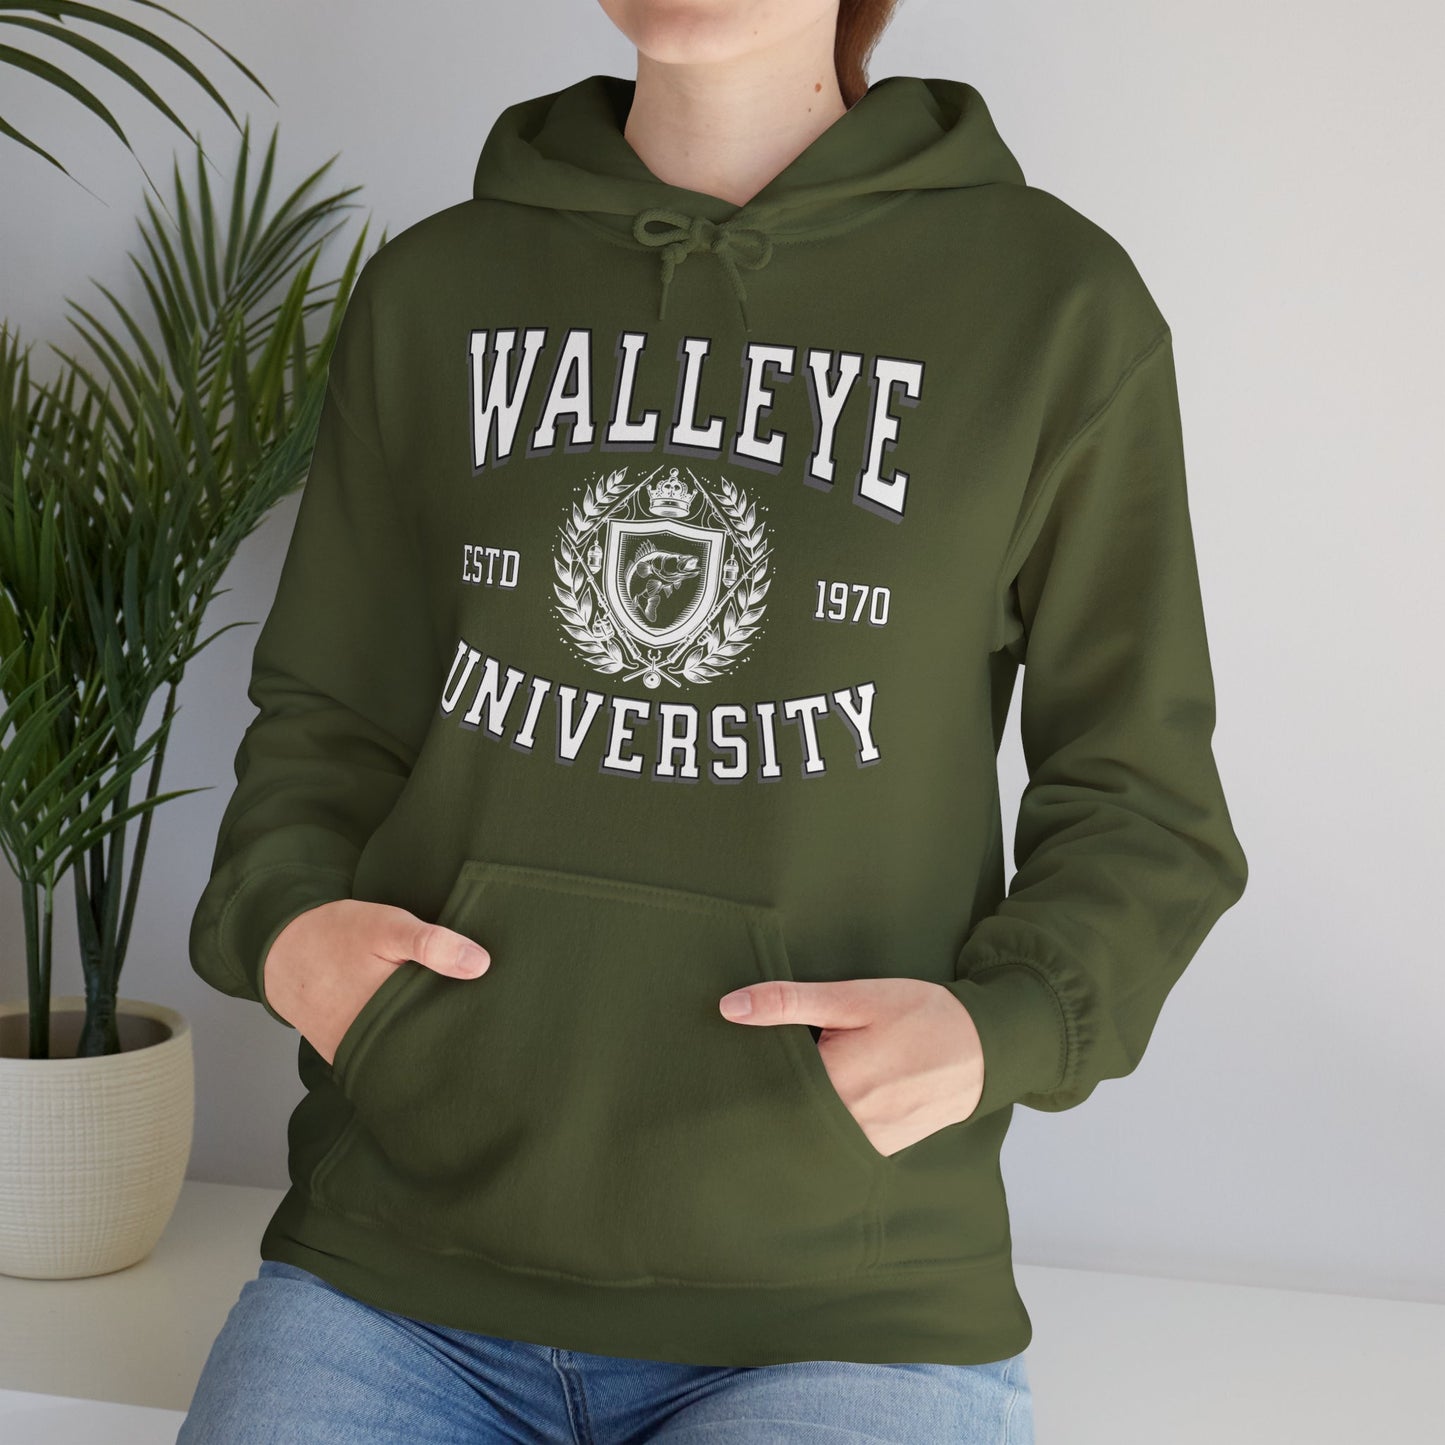 Walleye University - Cotton/Poly Blend Hoodie - 7 Colors